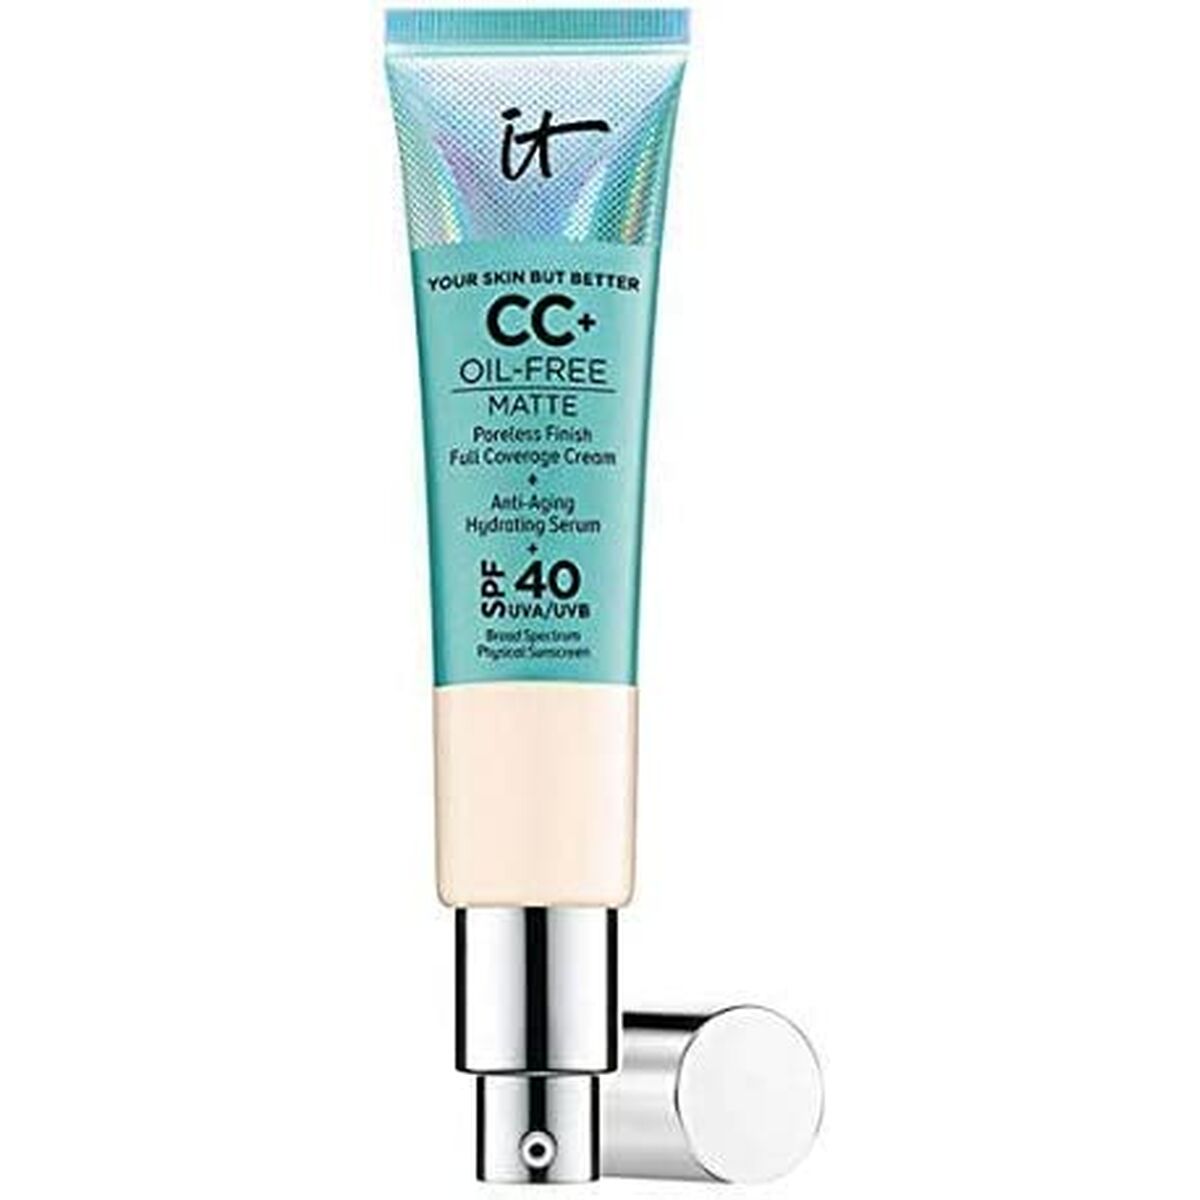 CC Cream It Cosmetics Spf 40 32 ml Fair-0